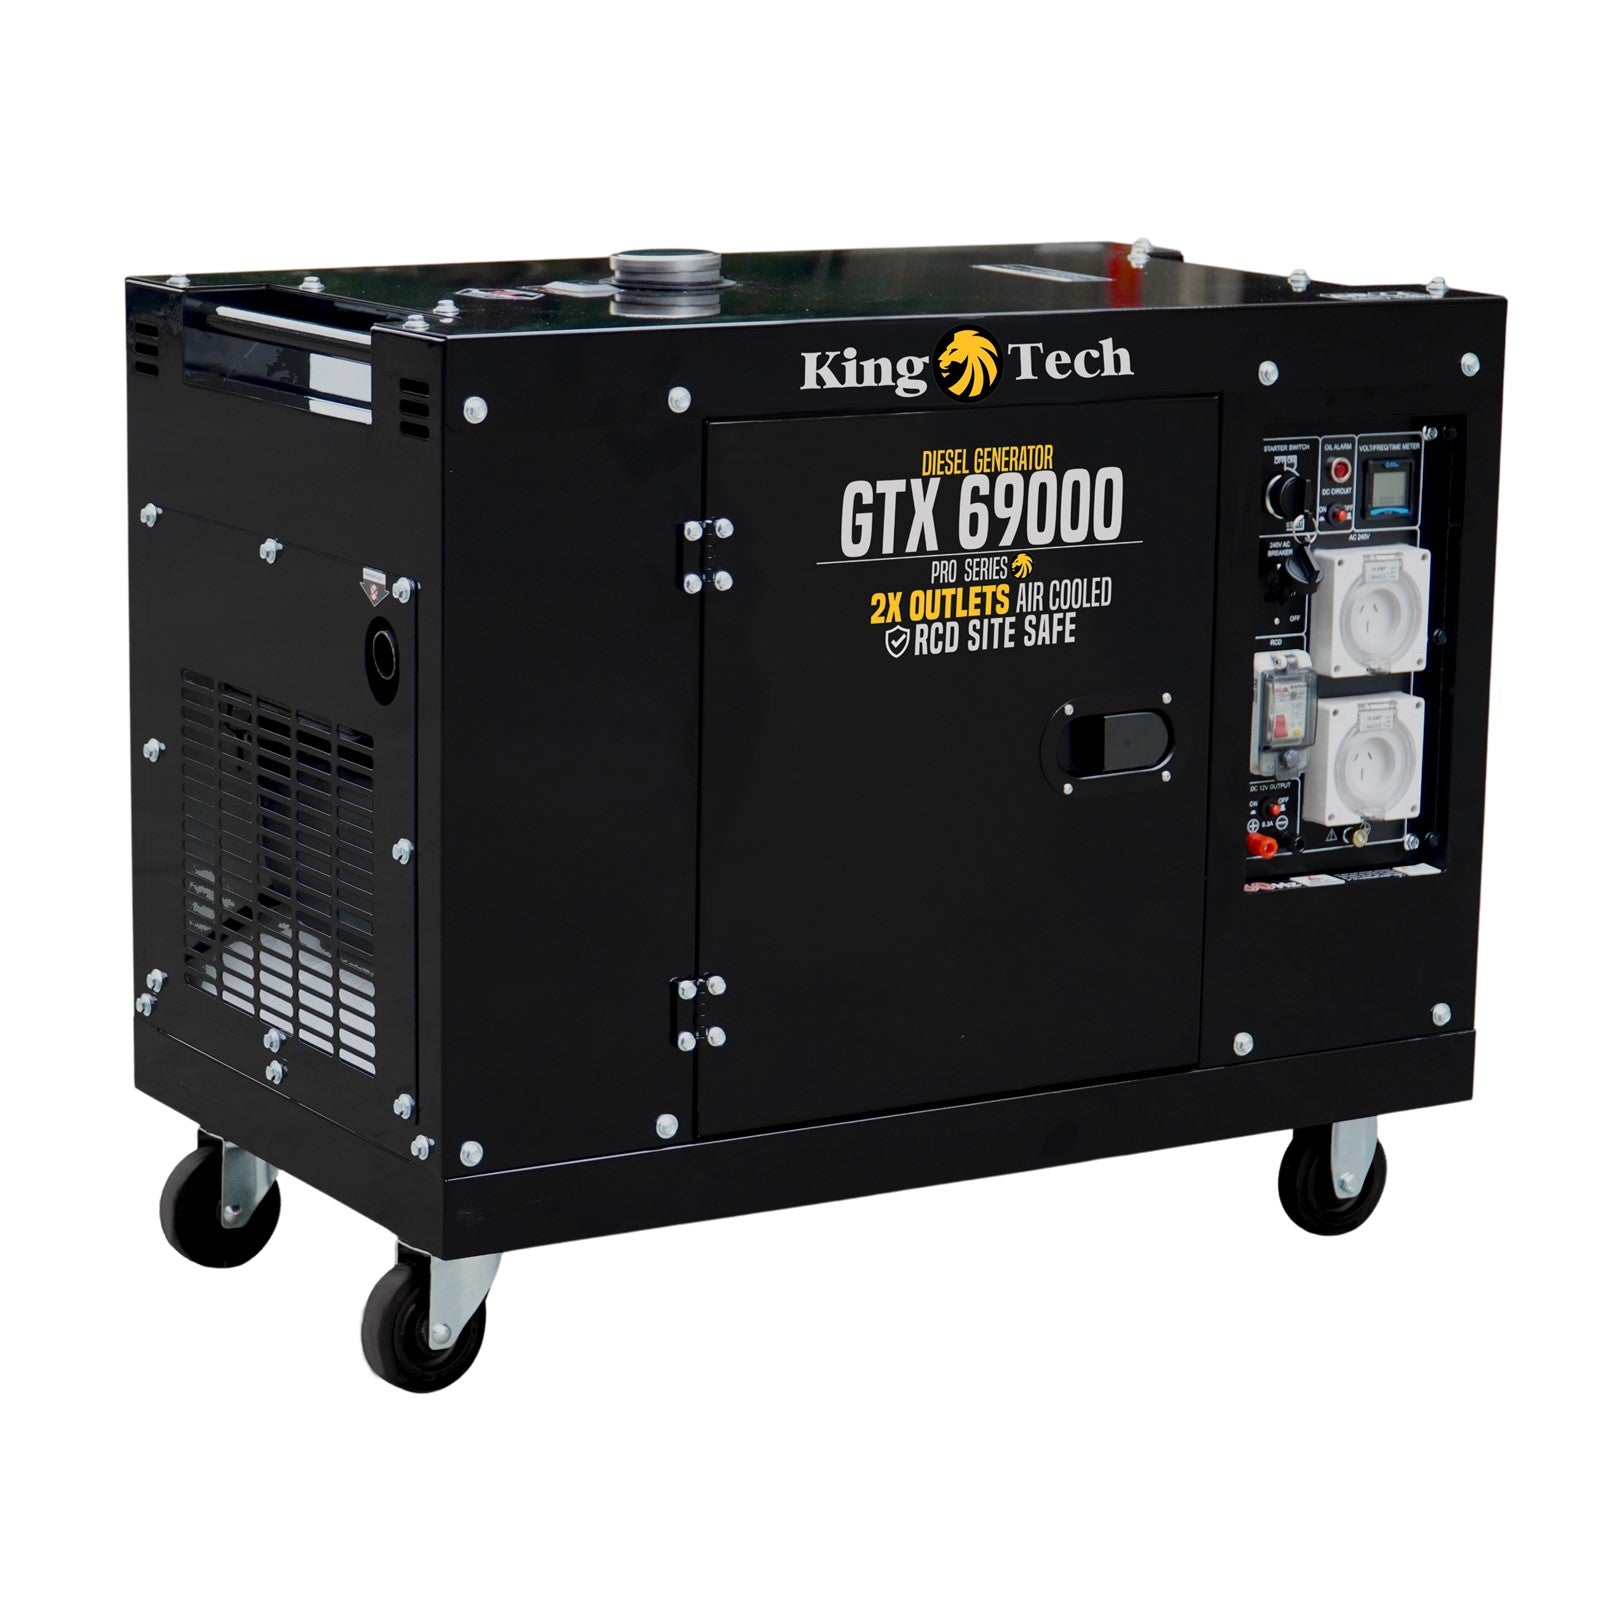 Portable Diesel Generator - Silent 8.4Kva GTX69000